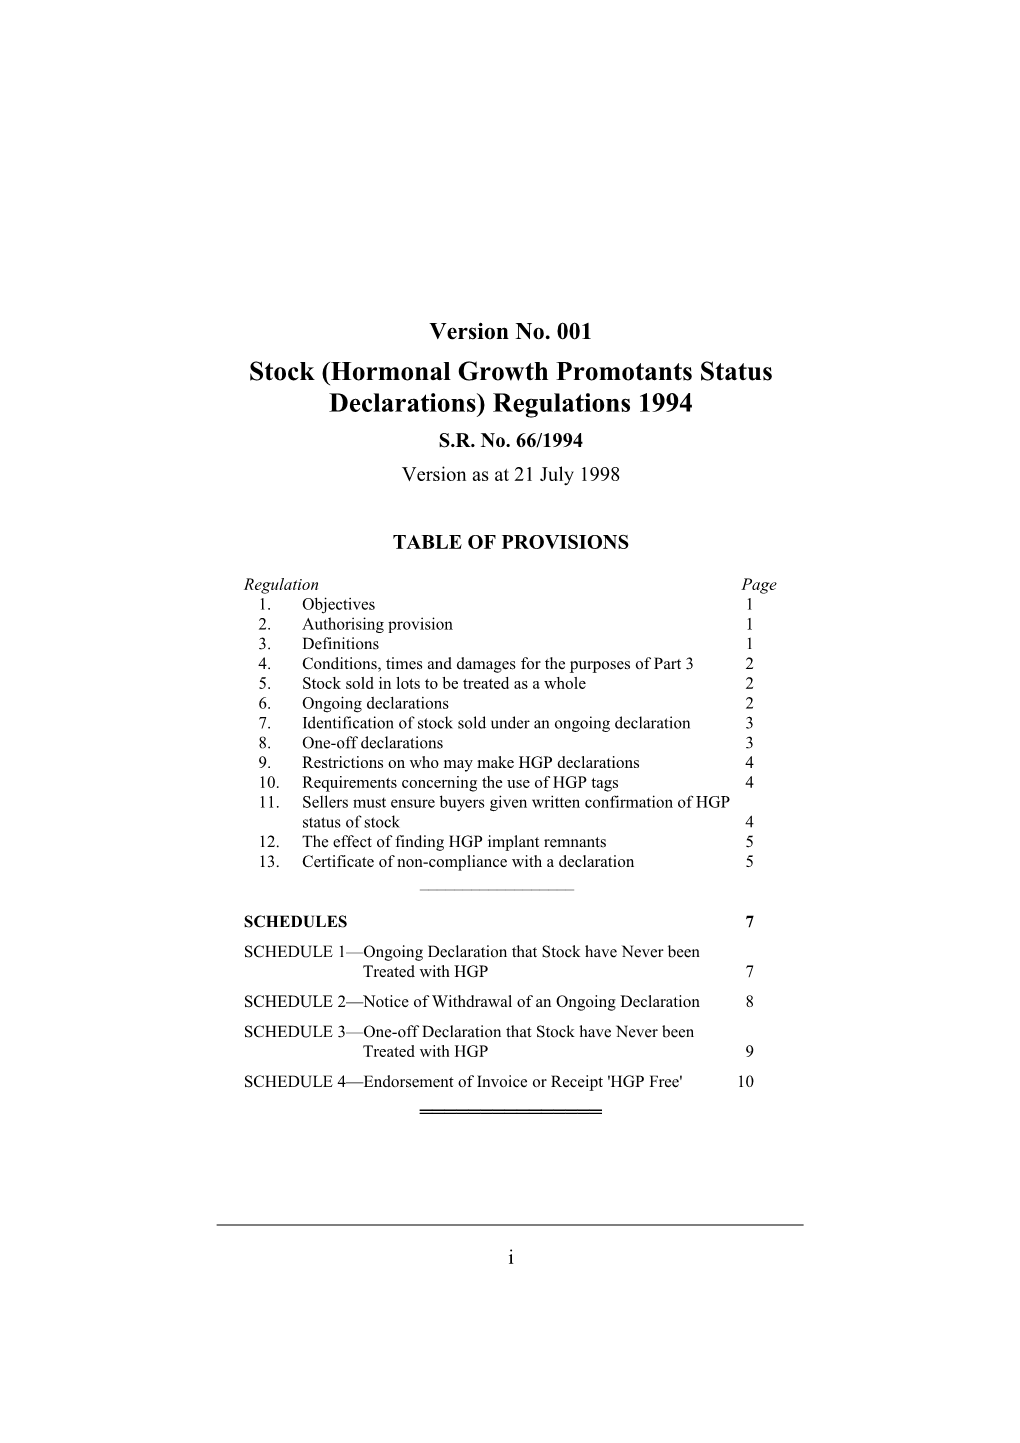 Stock (Hormonal Growth Promotants Status Declarations) Regulations 1994